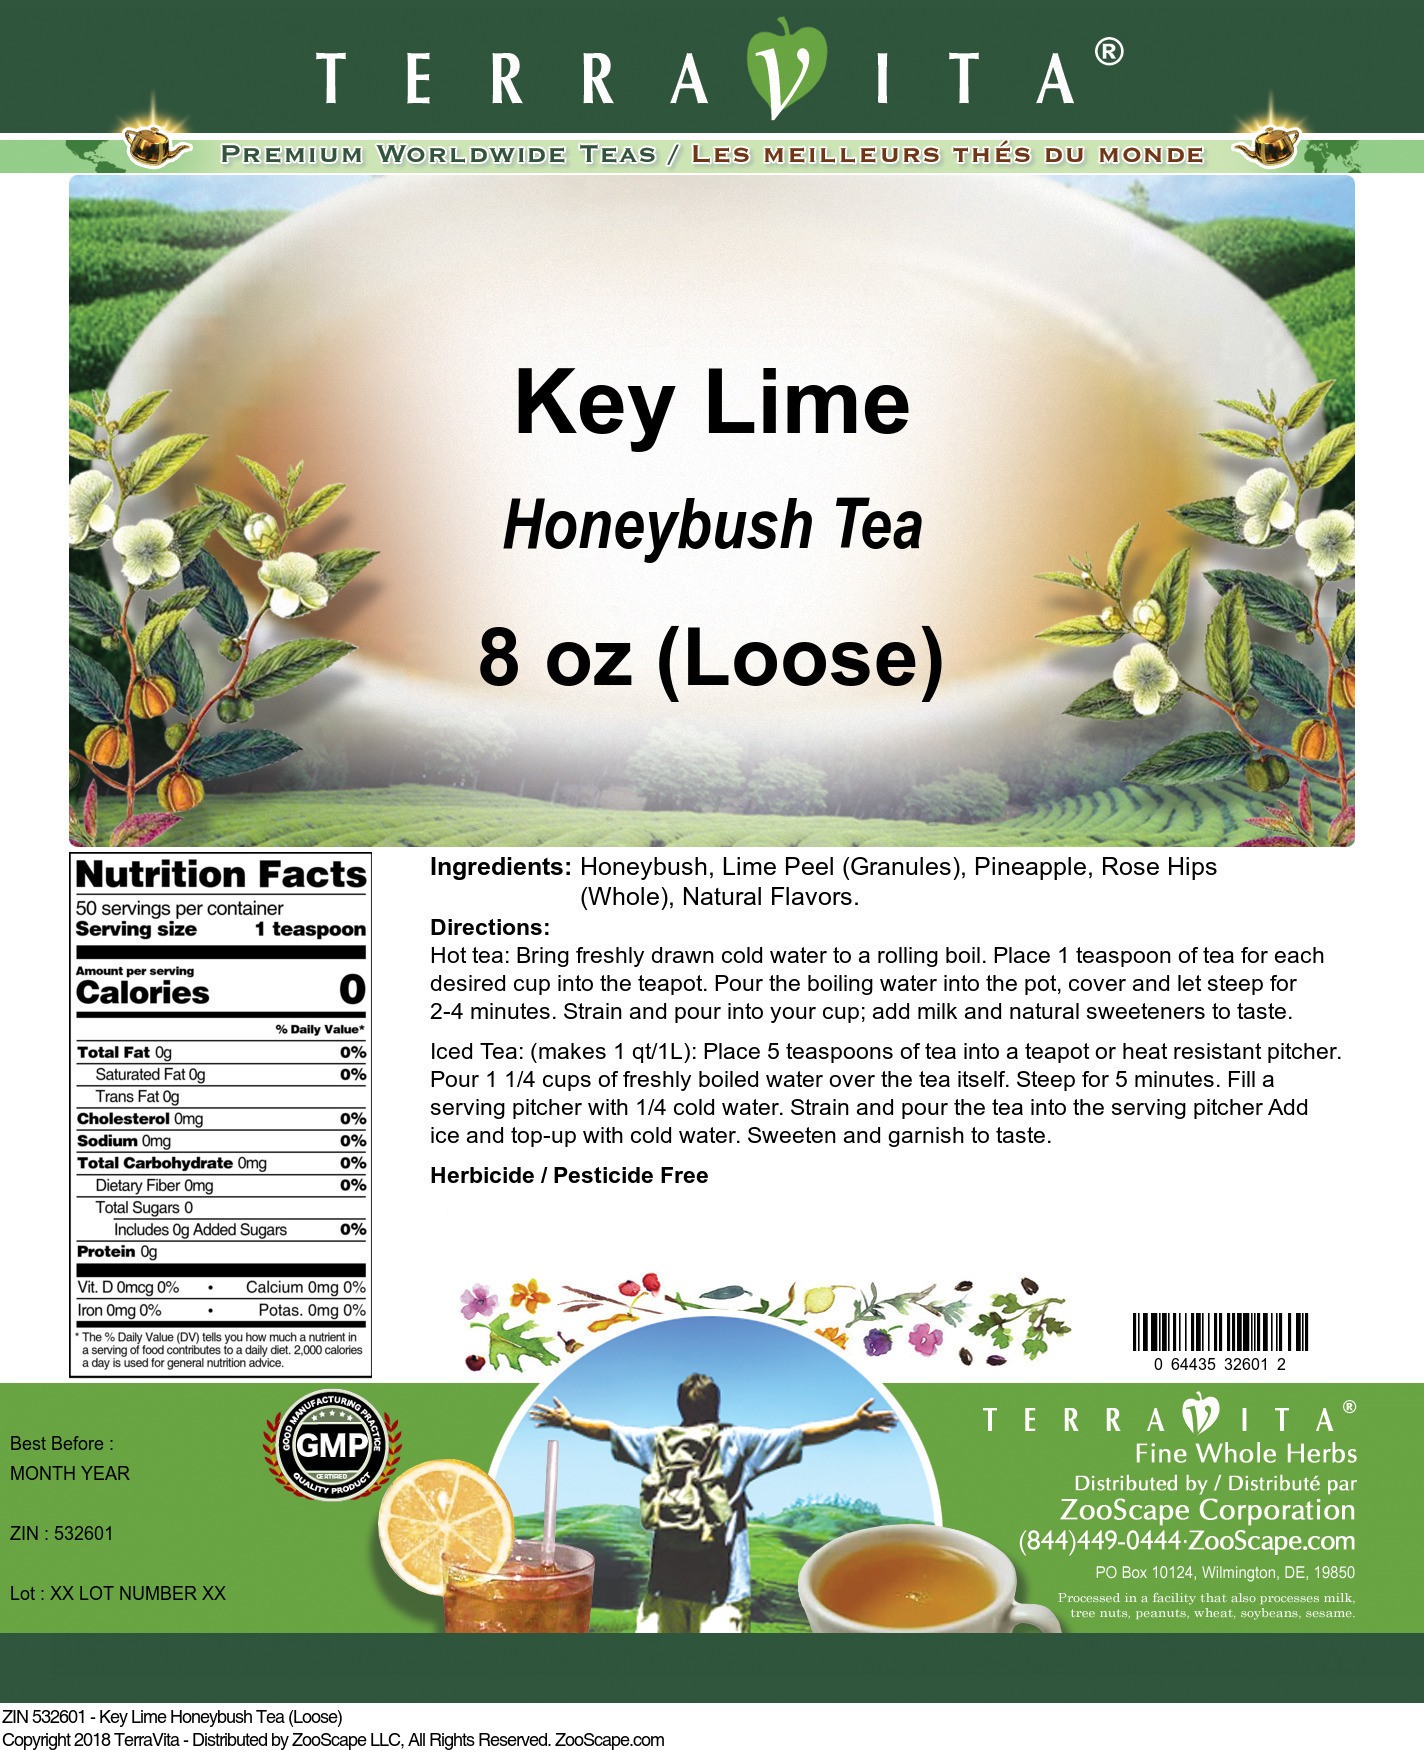 Key Lime Honeybush Tea (Loose) - Label